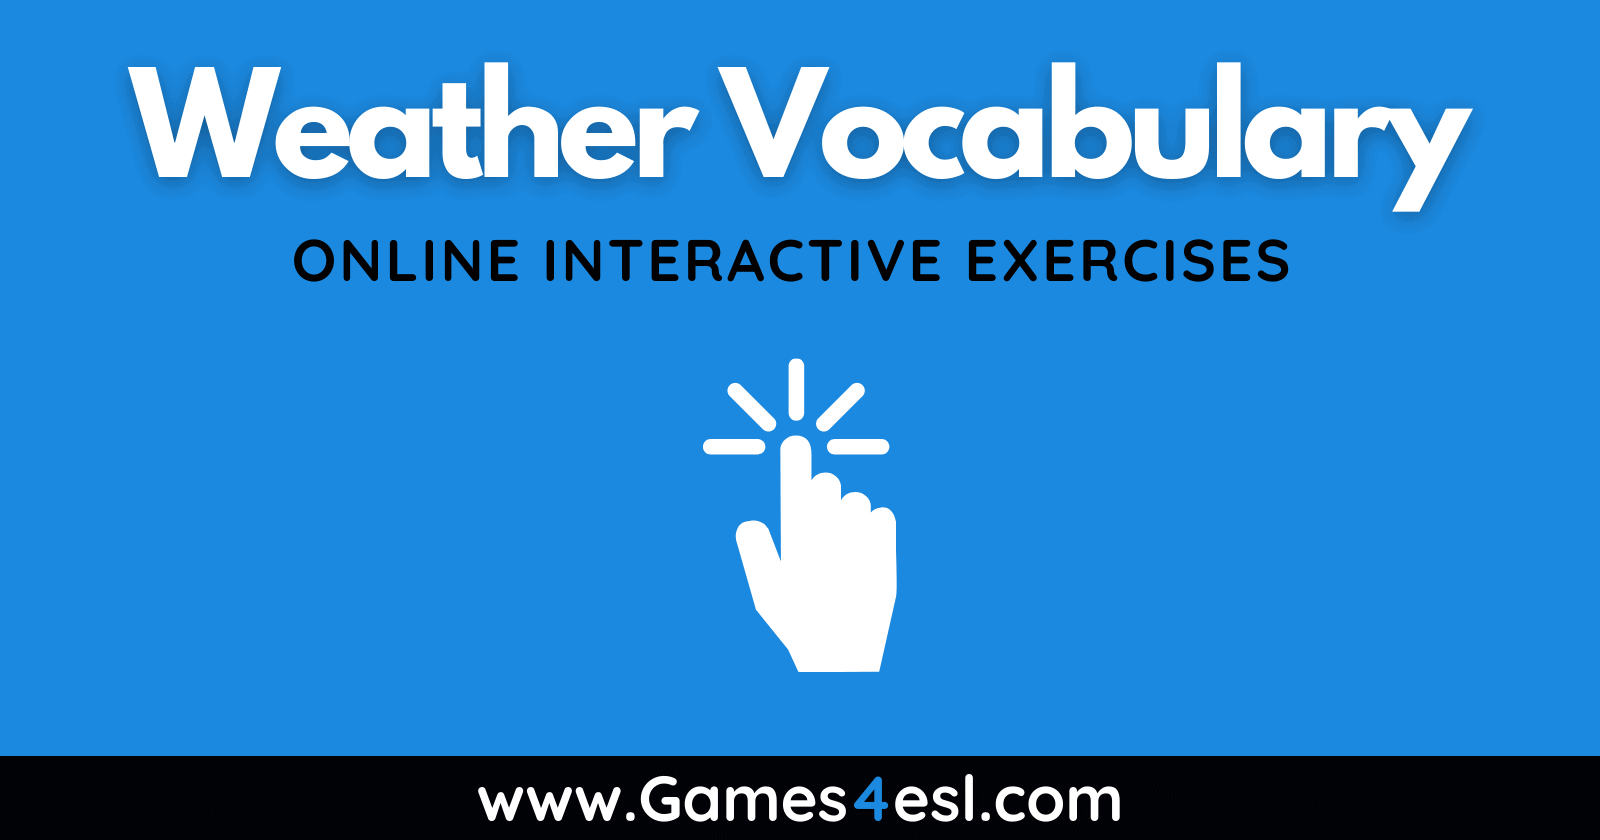 Weather Vocabulary Exercises